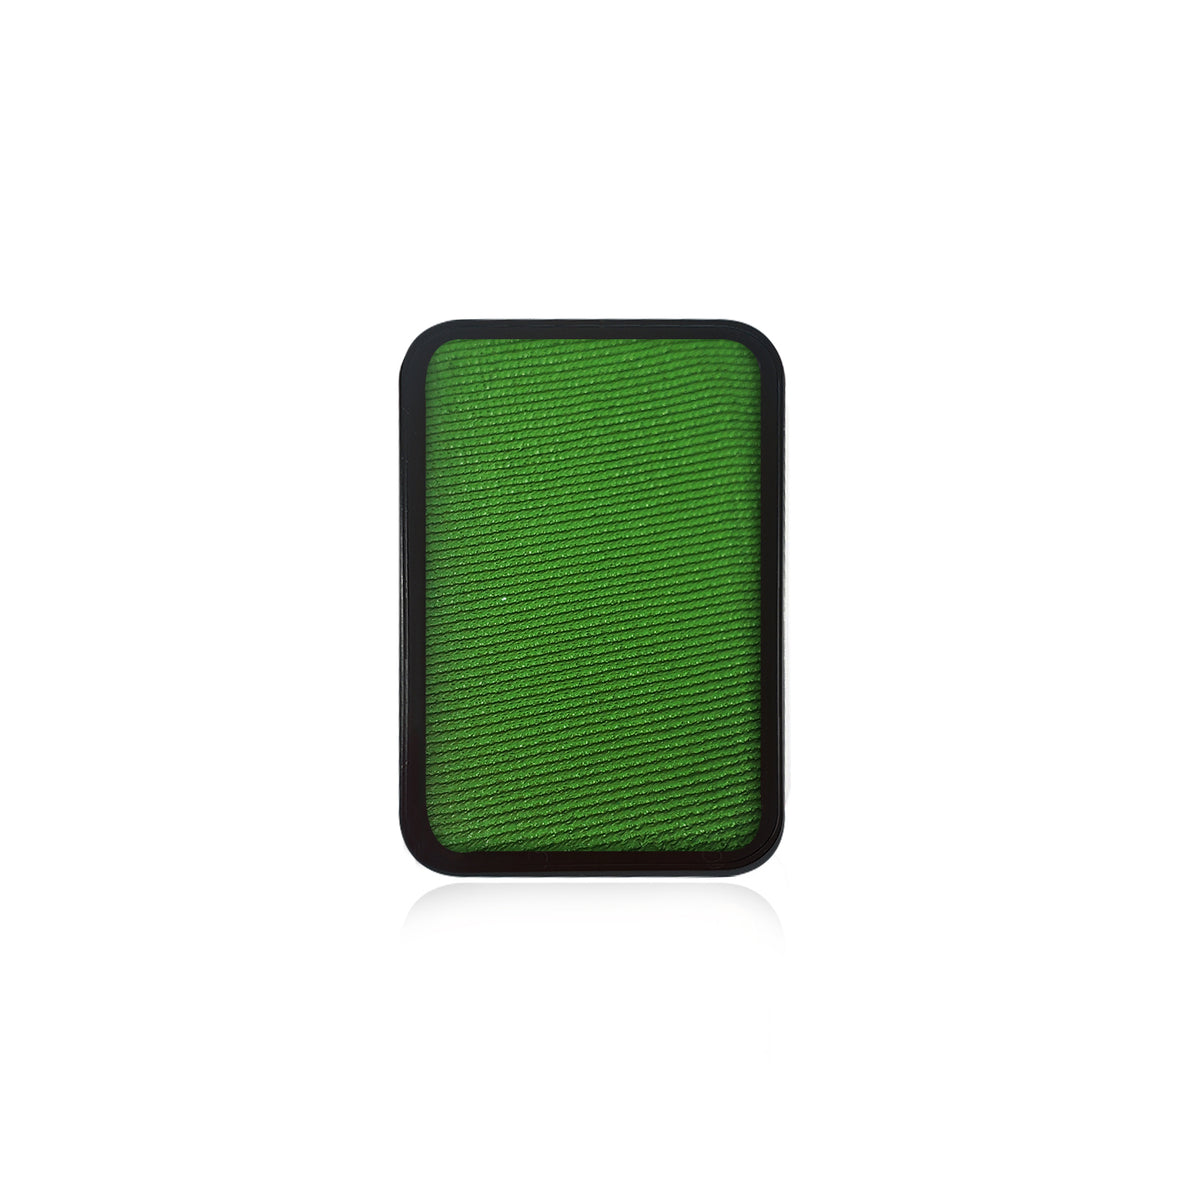 Kraze Face Paint Palette Refill - Green (0.35 oz/10 gm)